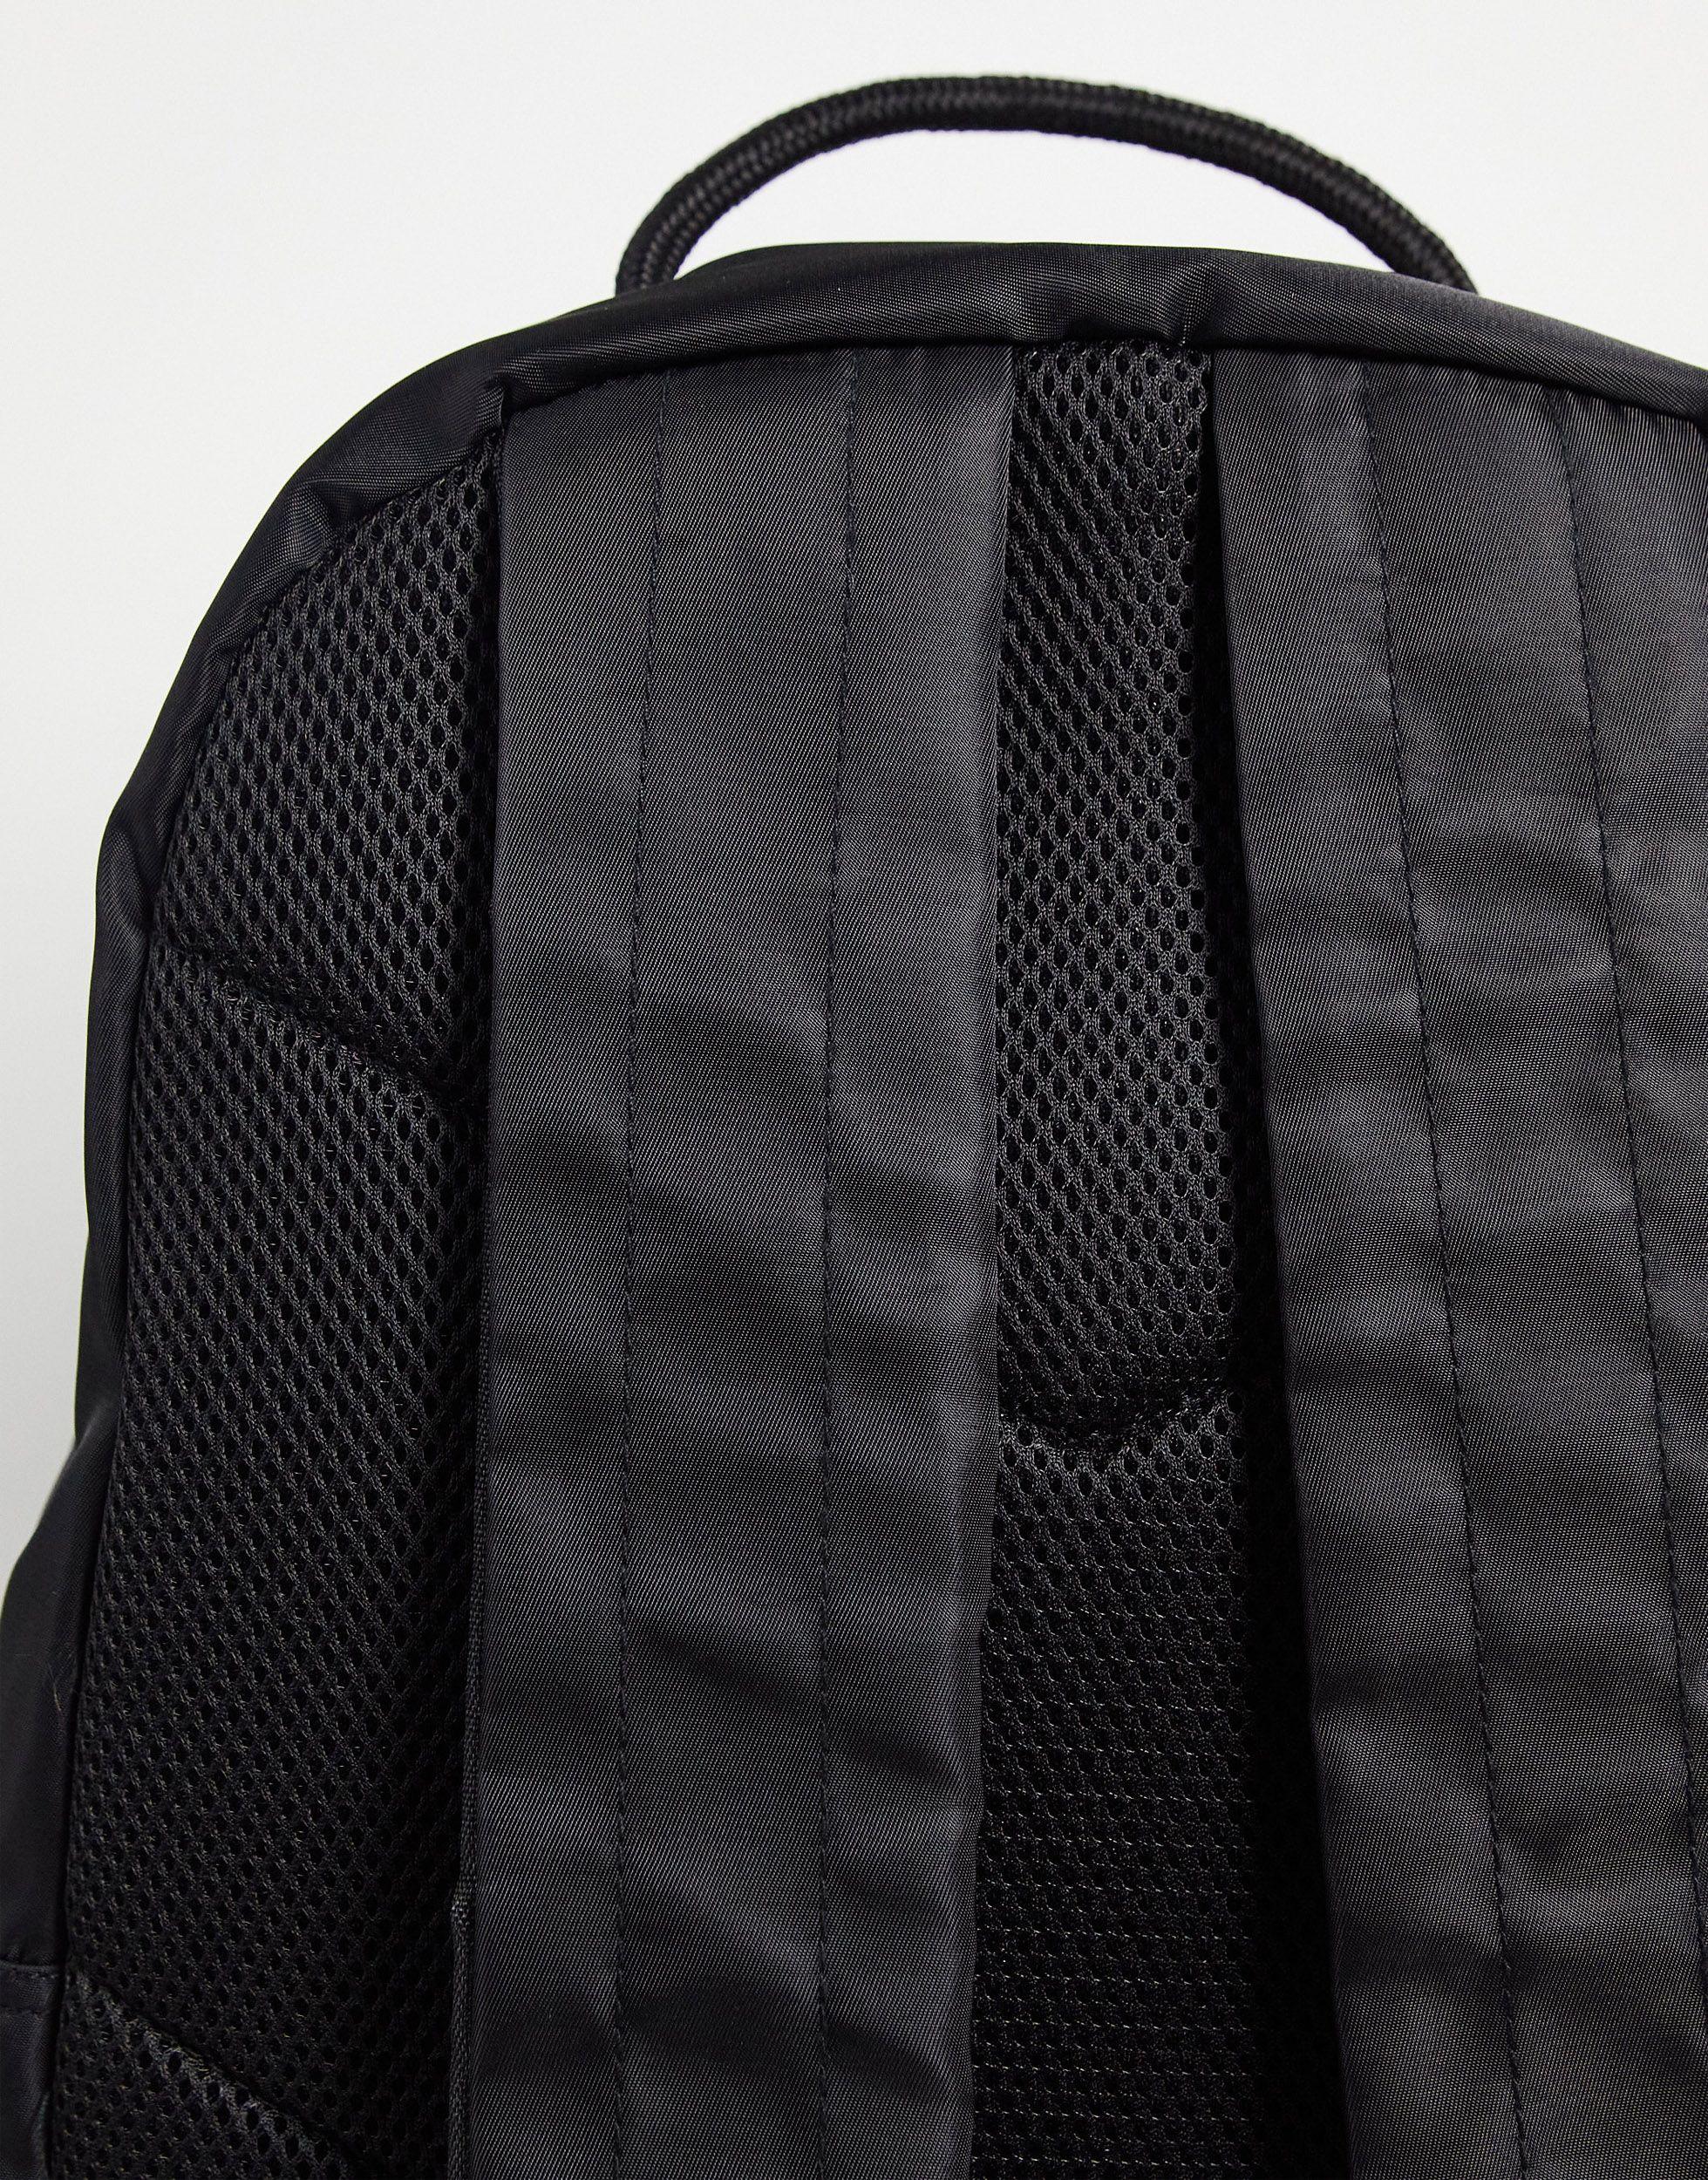 Farah Utility Backpack in Black for Men - Lyst